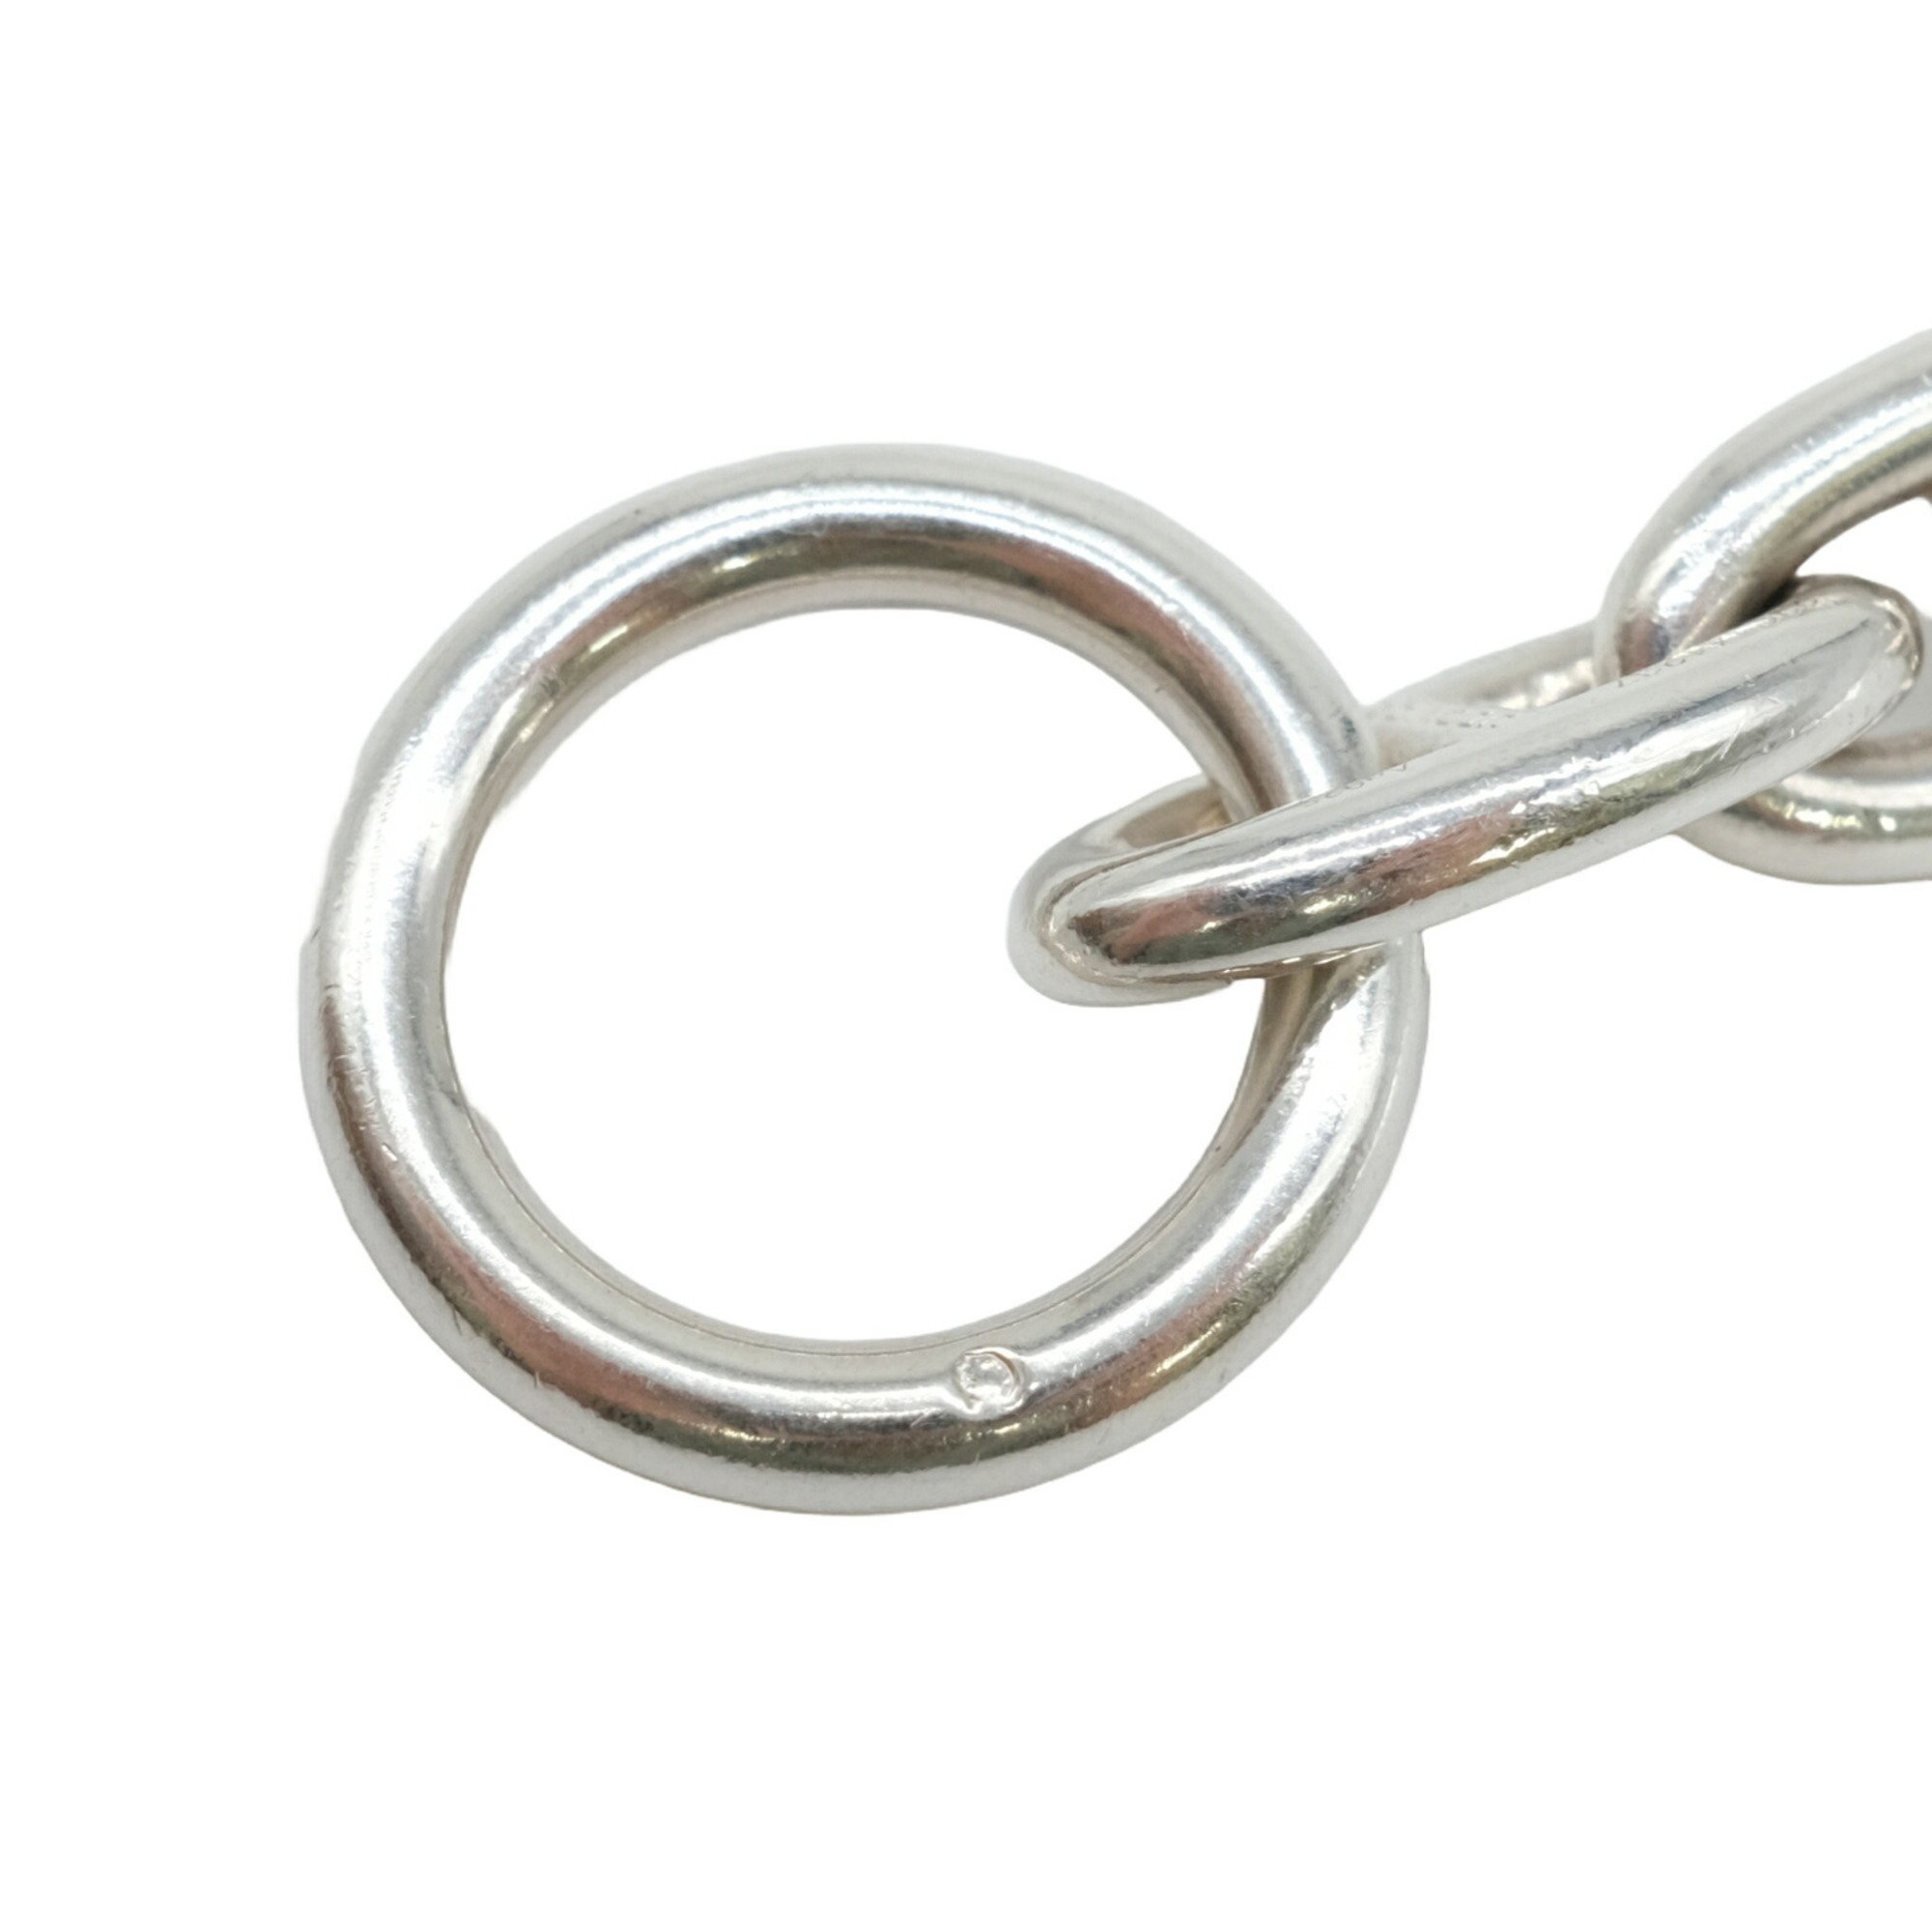 HERMES Chaine d'Ancre GM bracelet, 11 links, Ag925, silver